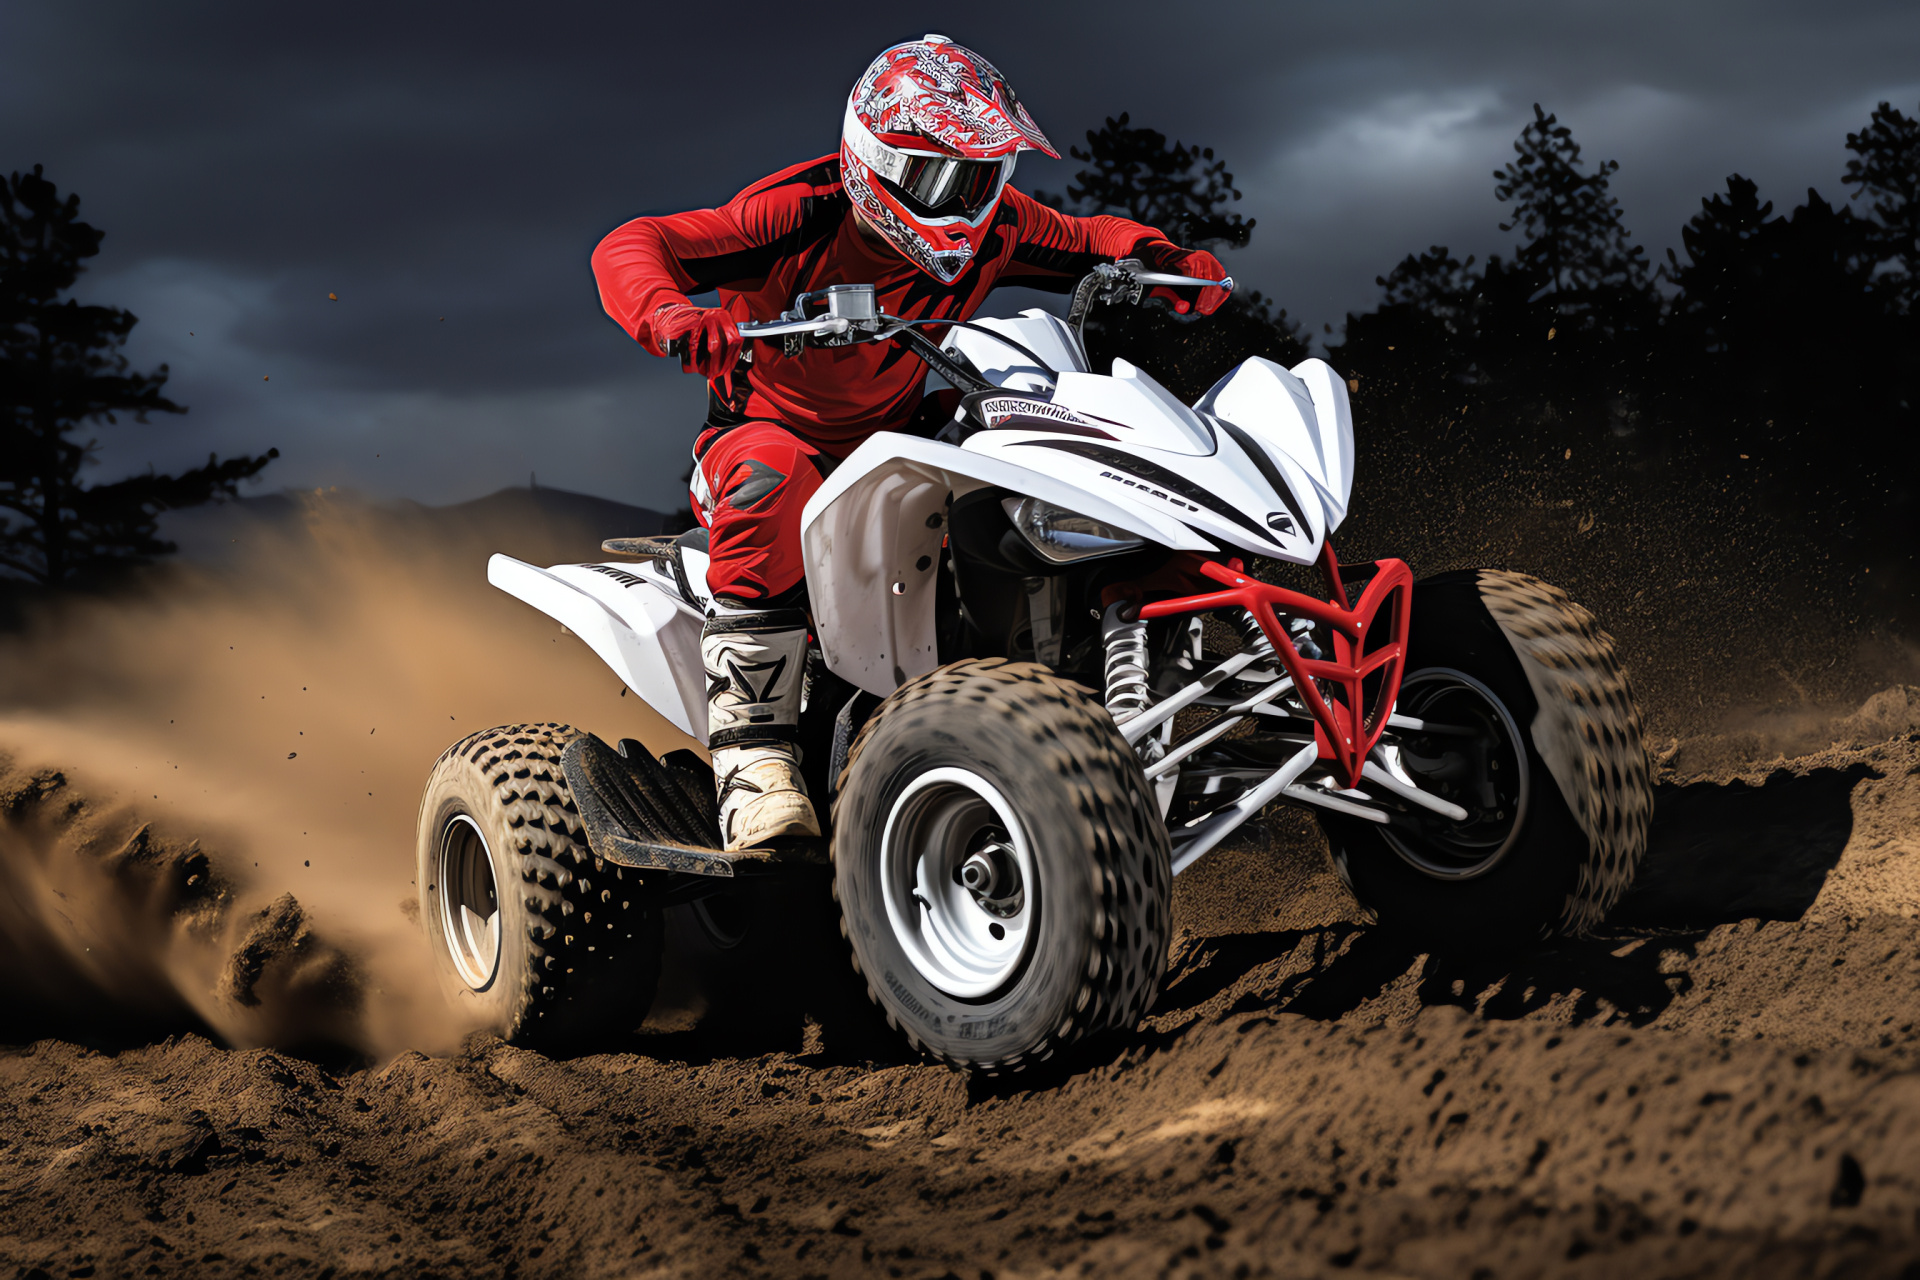 Raptor 700R ATV, Motocross action, Sporty exterior, Optimized clearance, Dirt track ready, HD Desktop Image